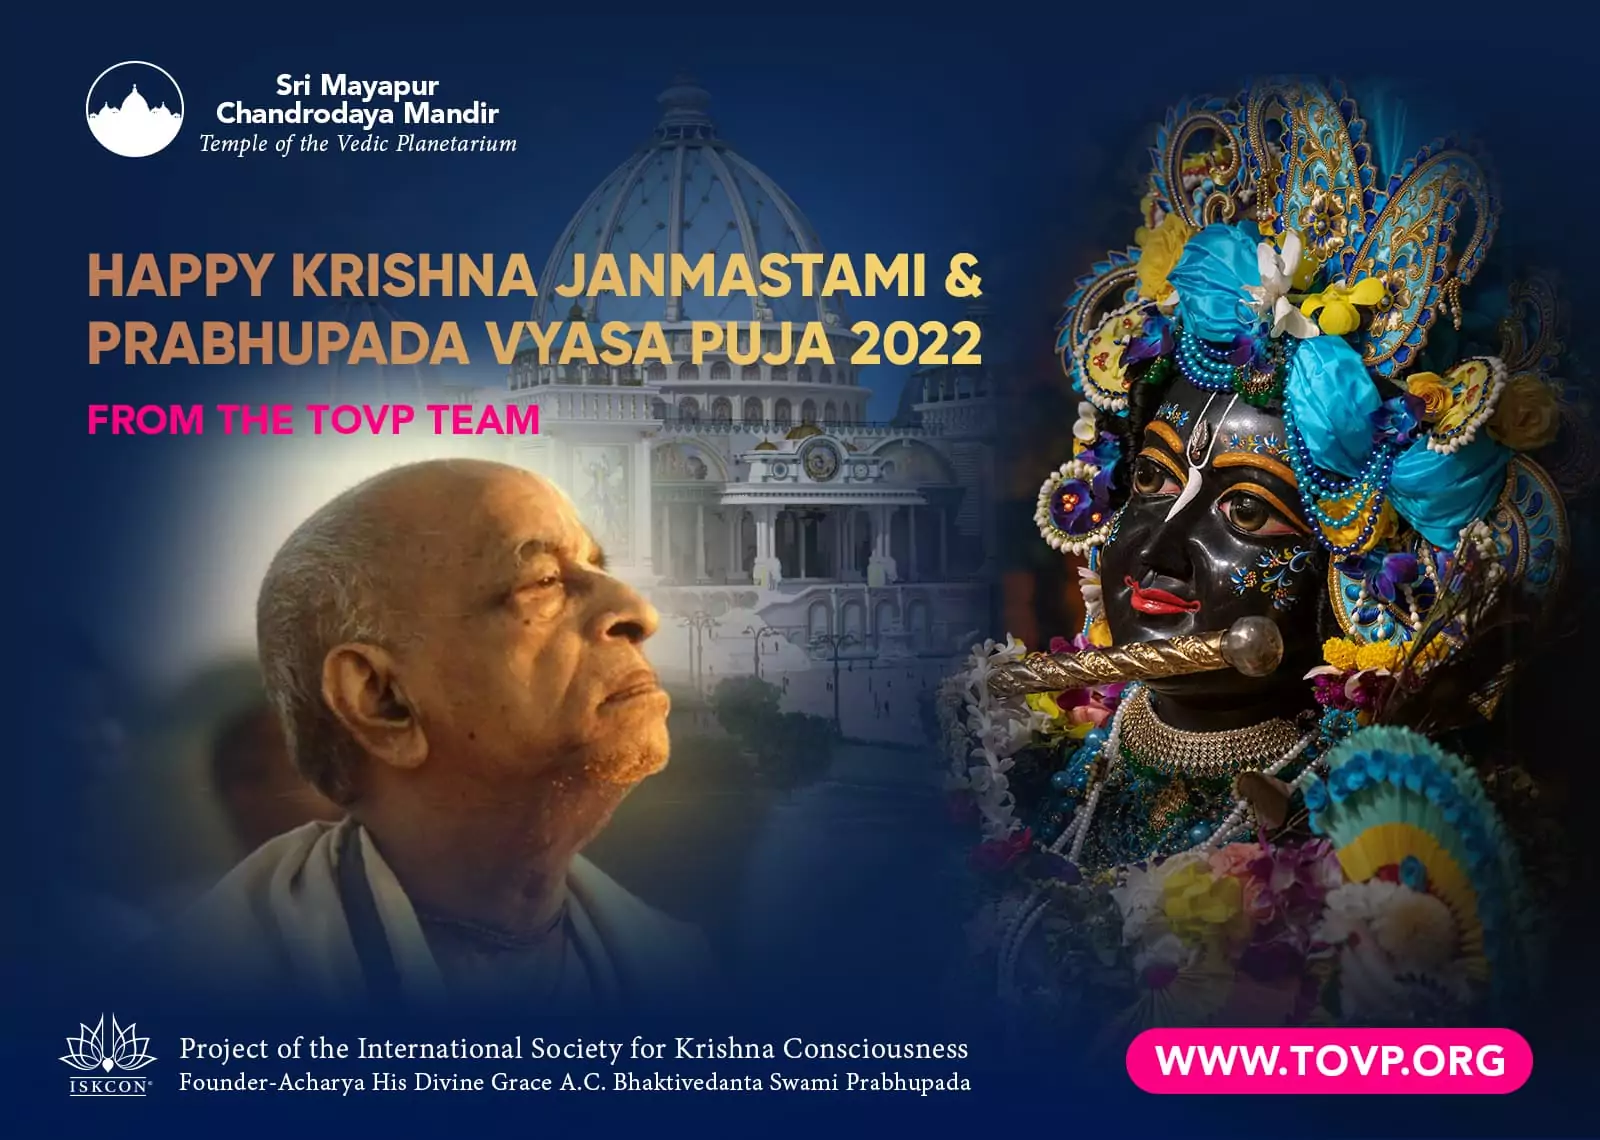 Buon Krishna Janmastami e Prabhupada Vyasa Puja 2022 dal TOVP Team